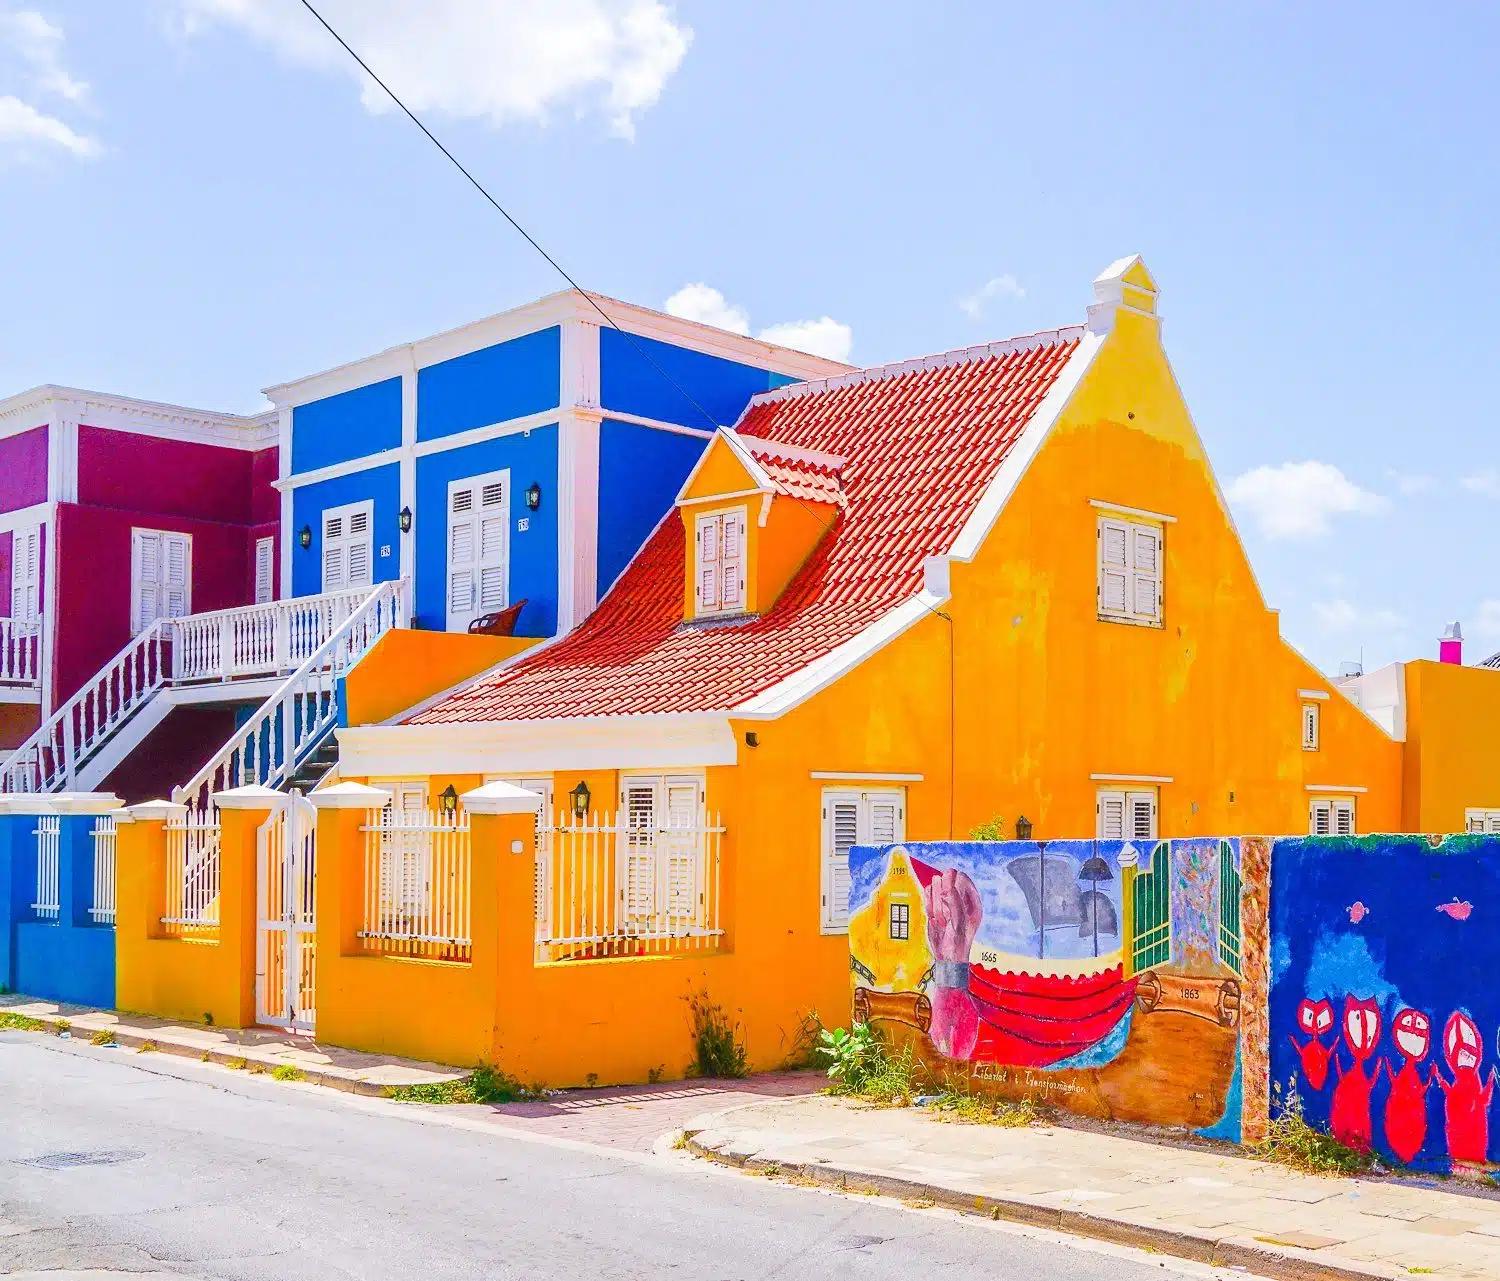 So bright and happy, Curaçao!